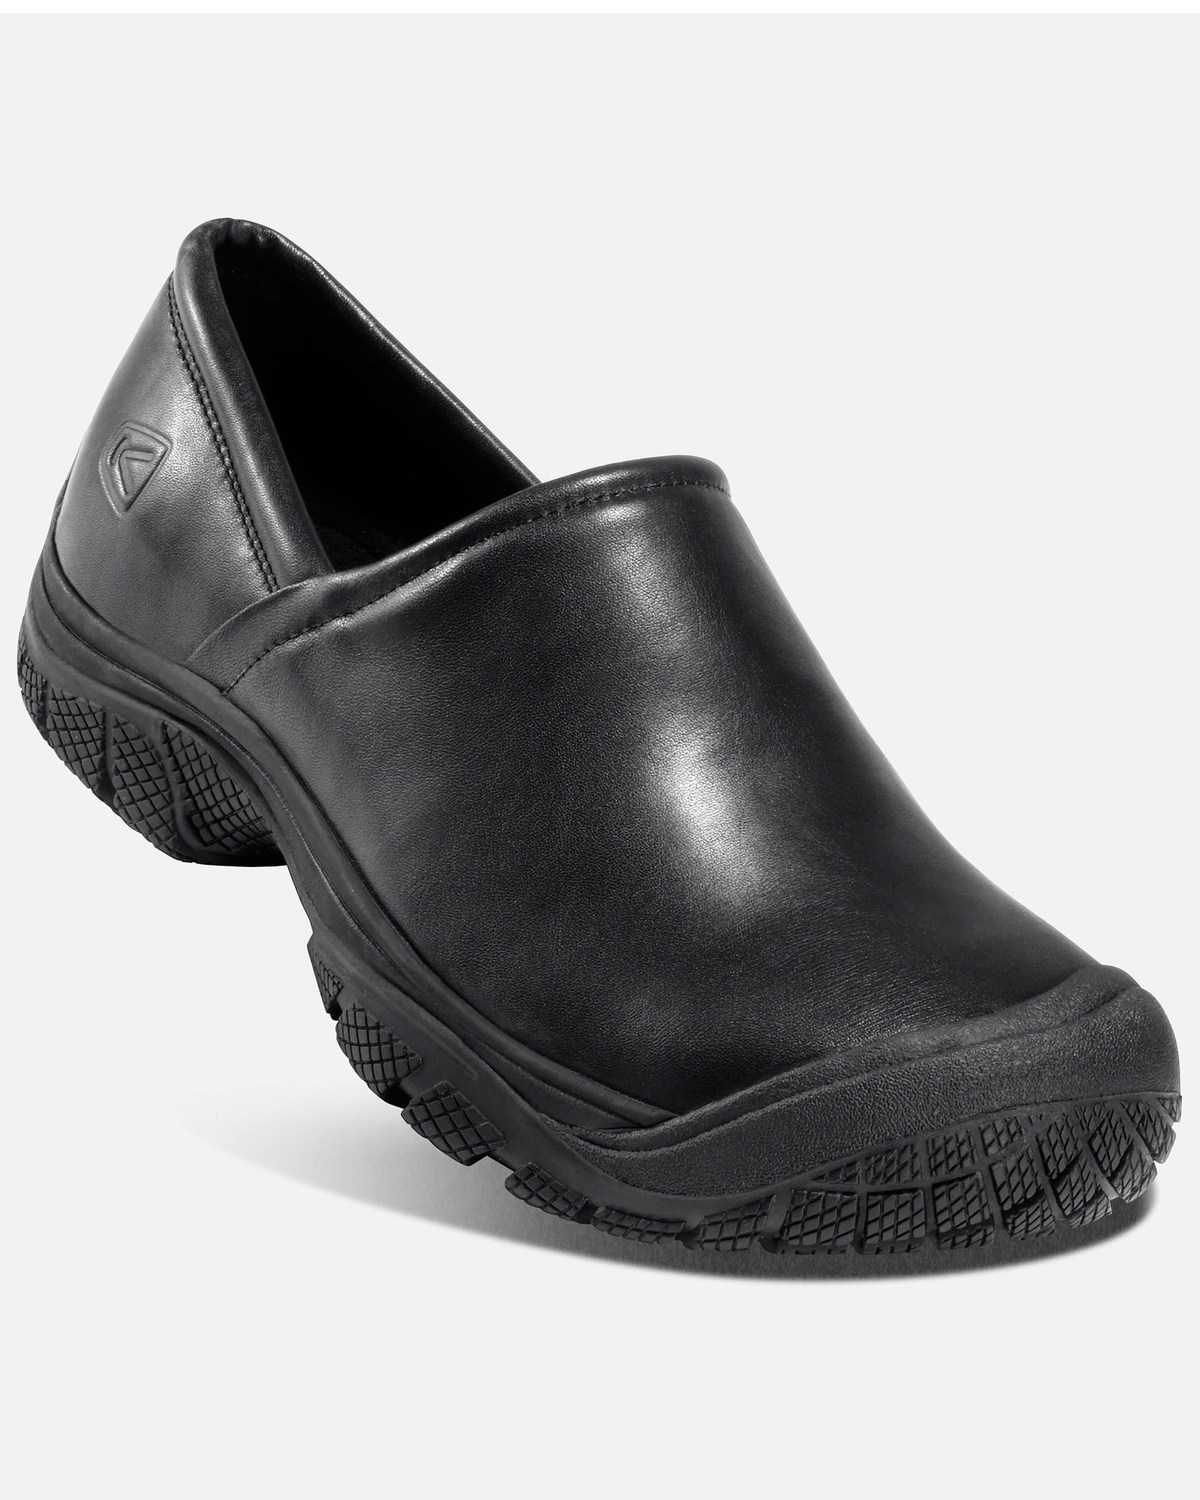 Keen Men's PTC Slip-On Work Shoes - Round Toe